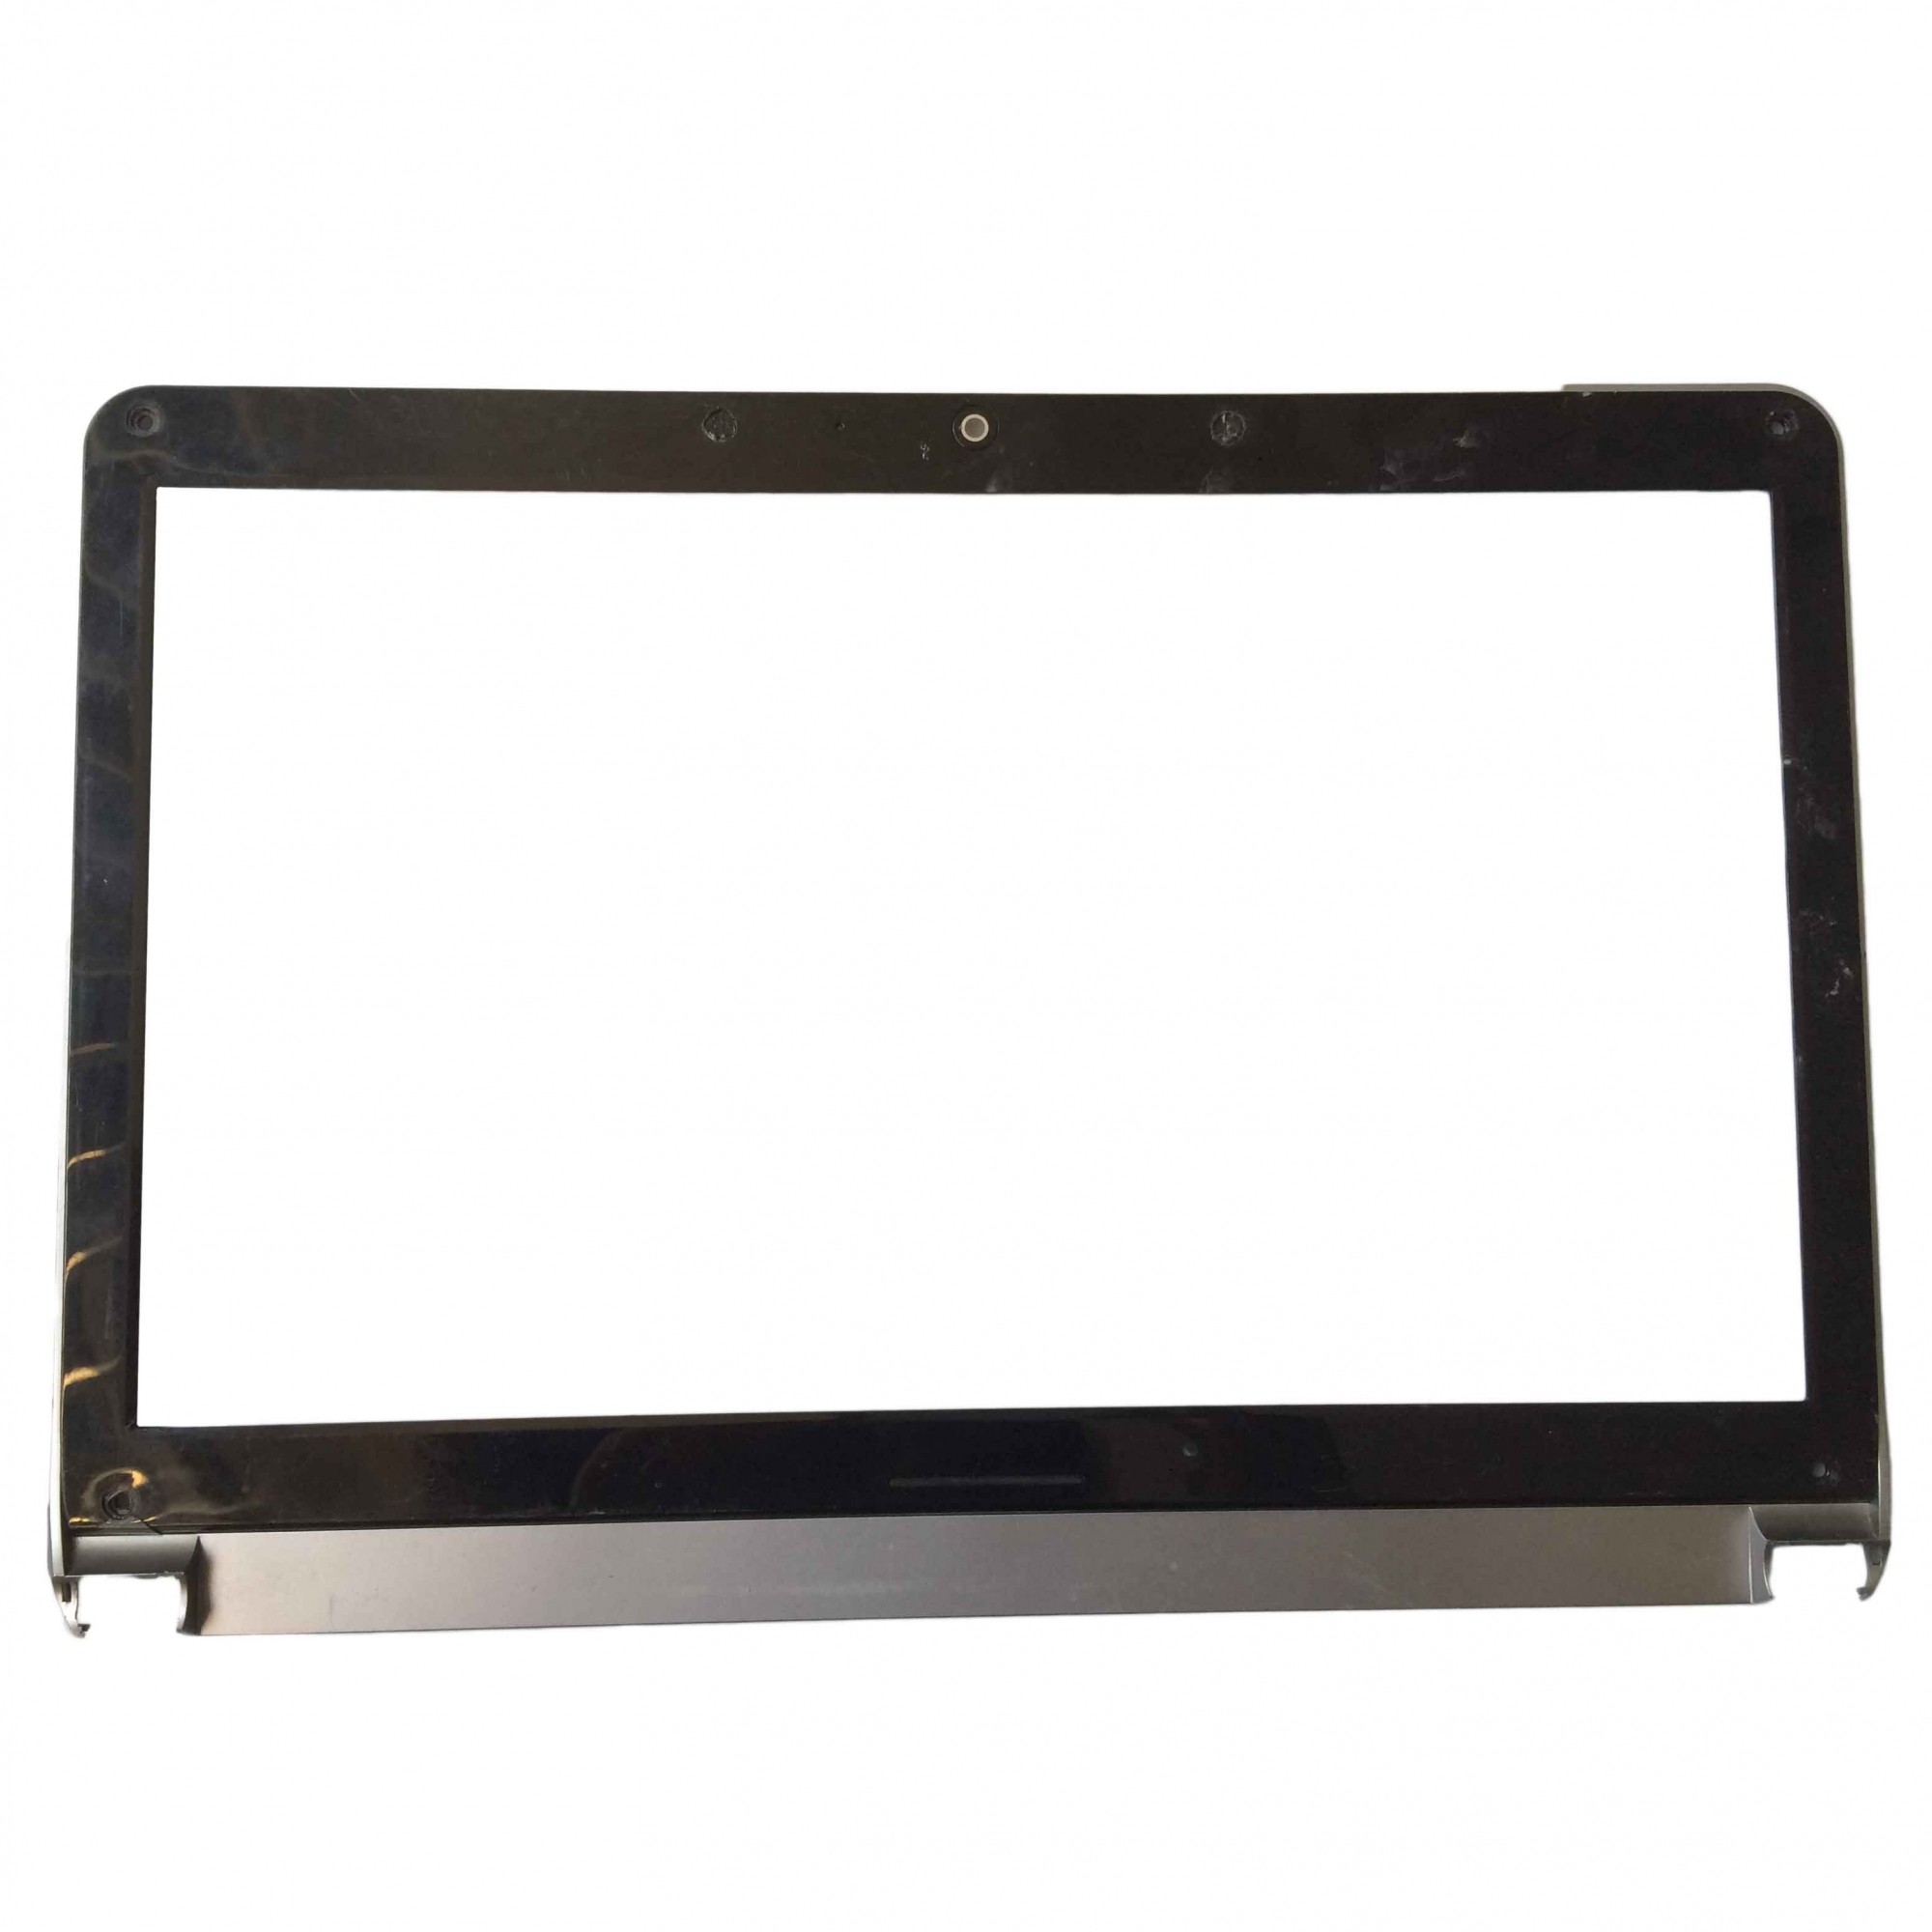 Moldura Tela LCD Notebook Itautec Infoway W7435 PN:34sw9lb0010 - Retirado